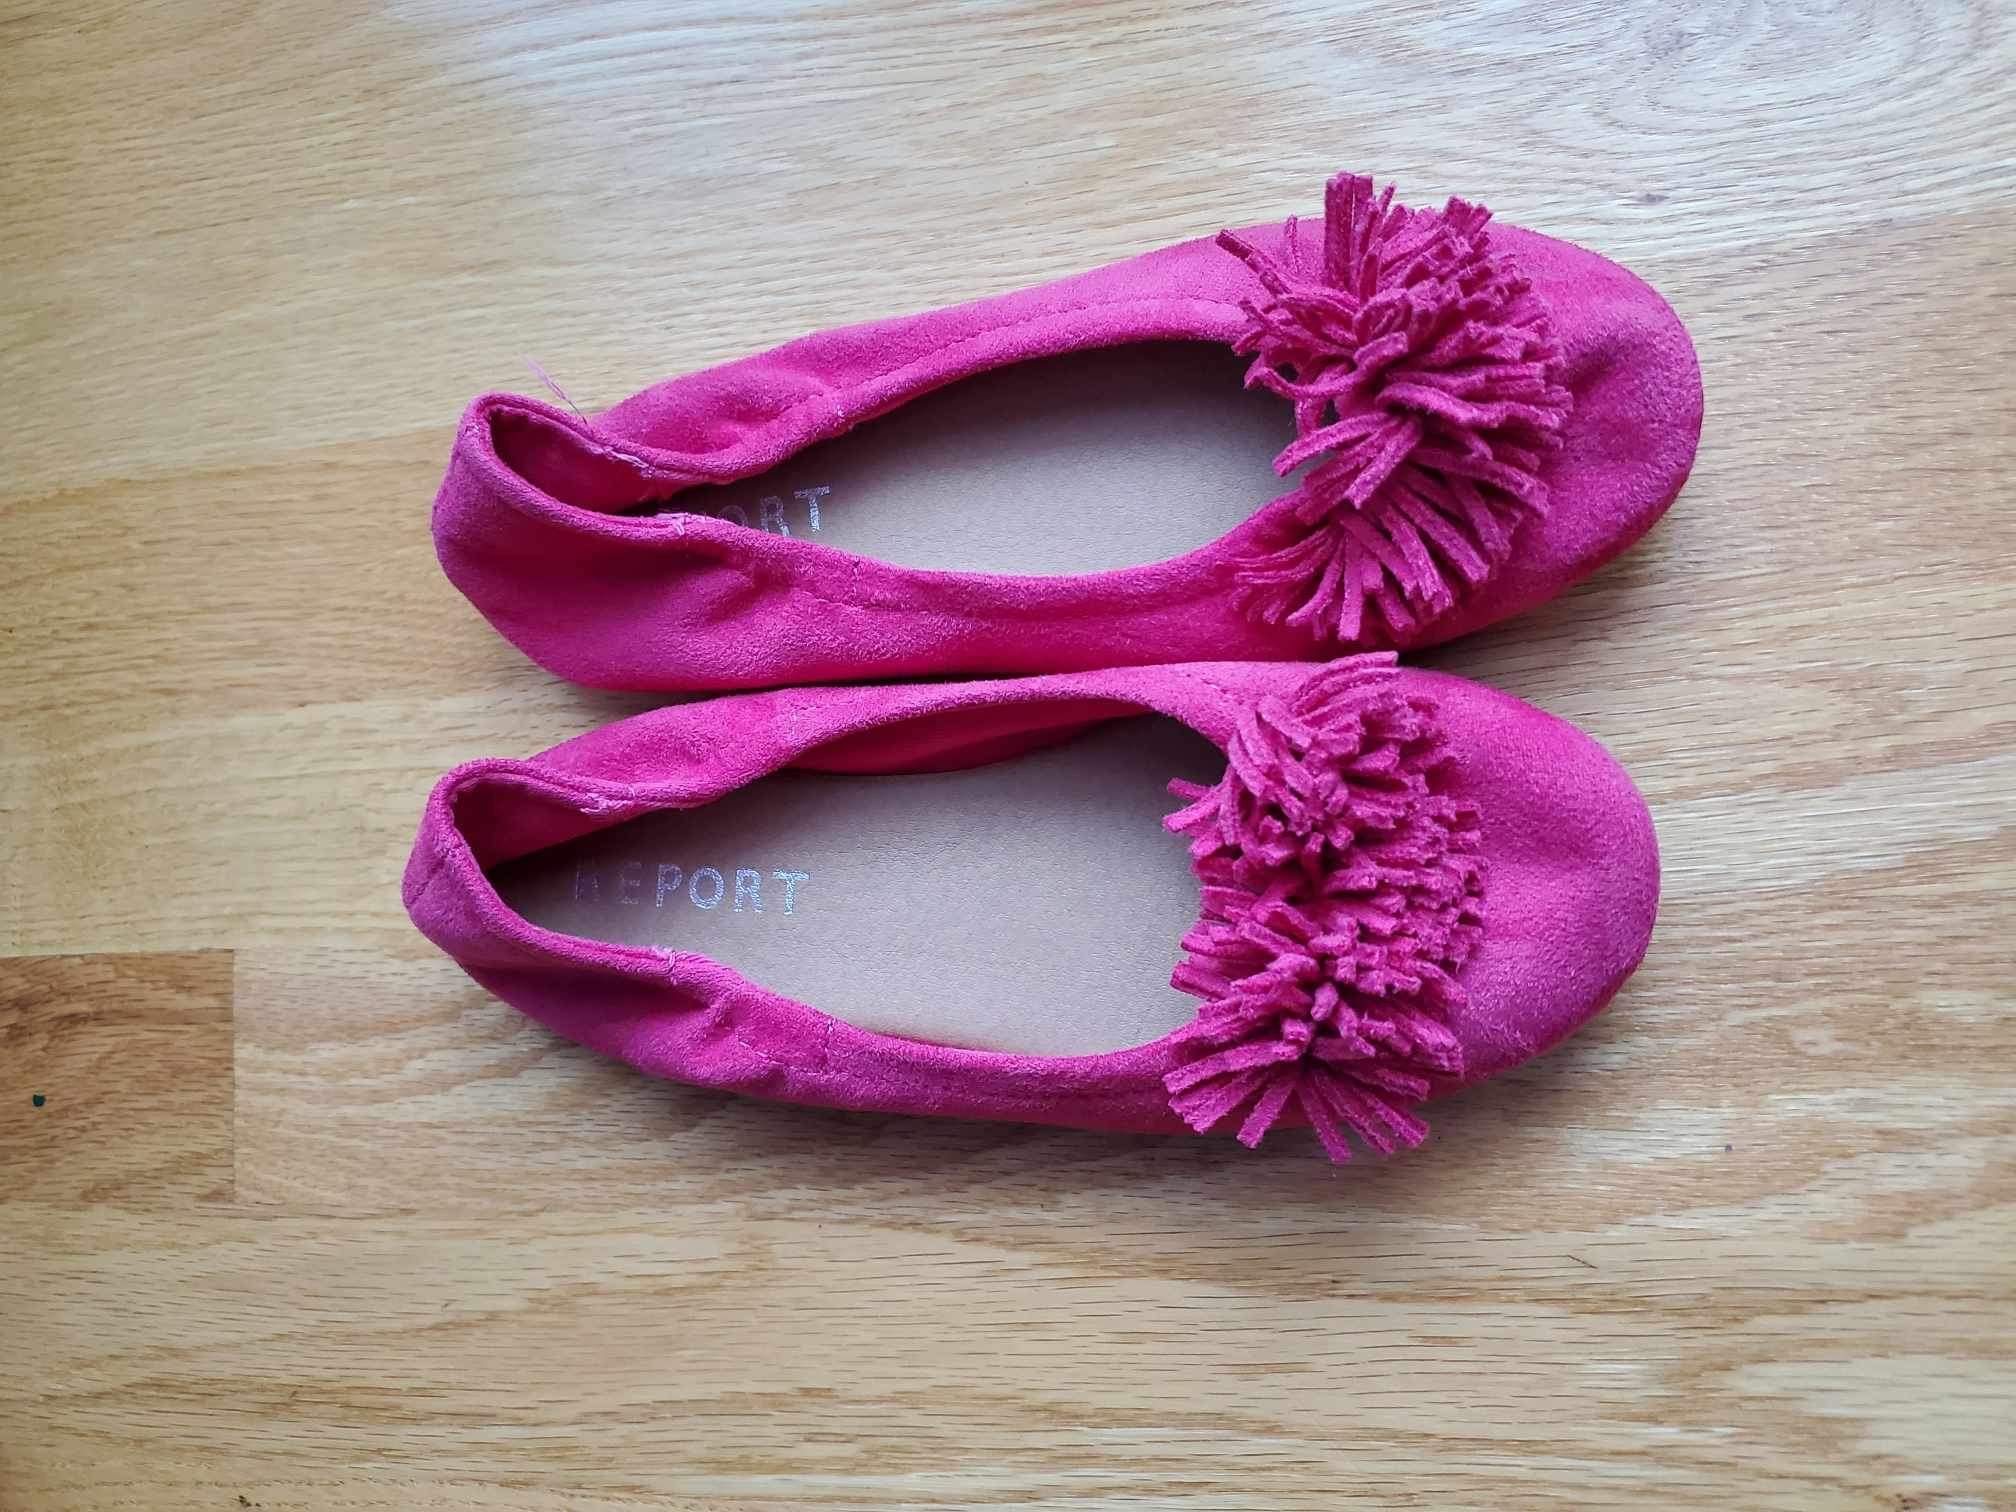 Pink Flats Size 4 Girls Kids Shoes